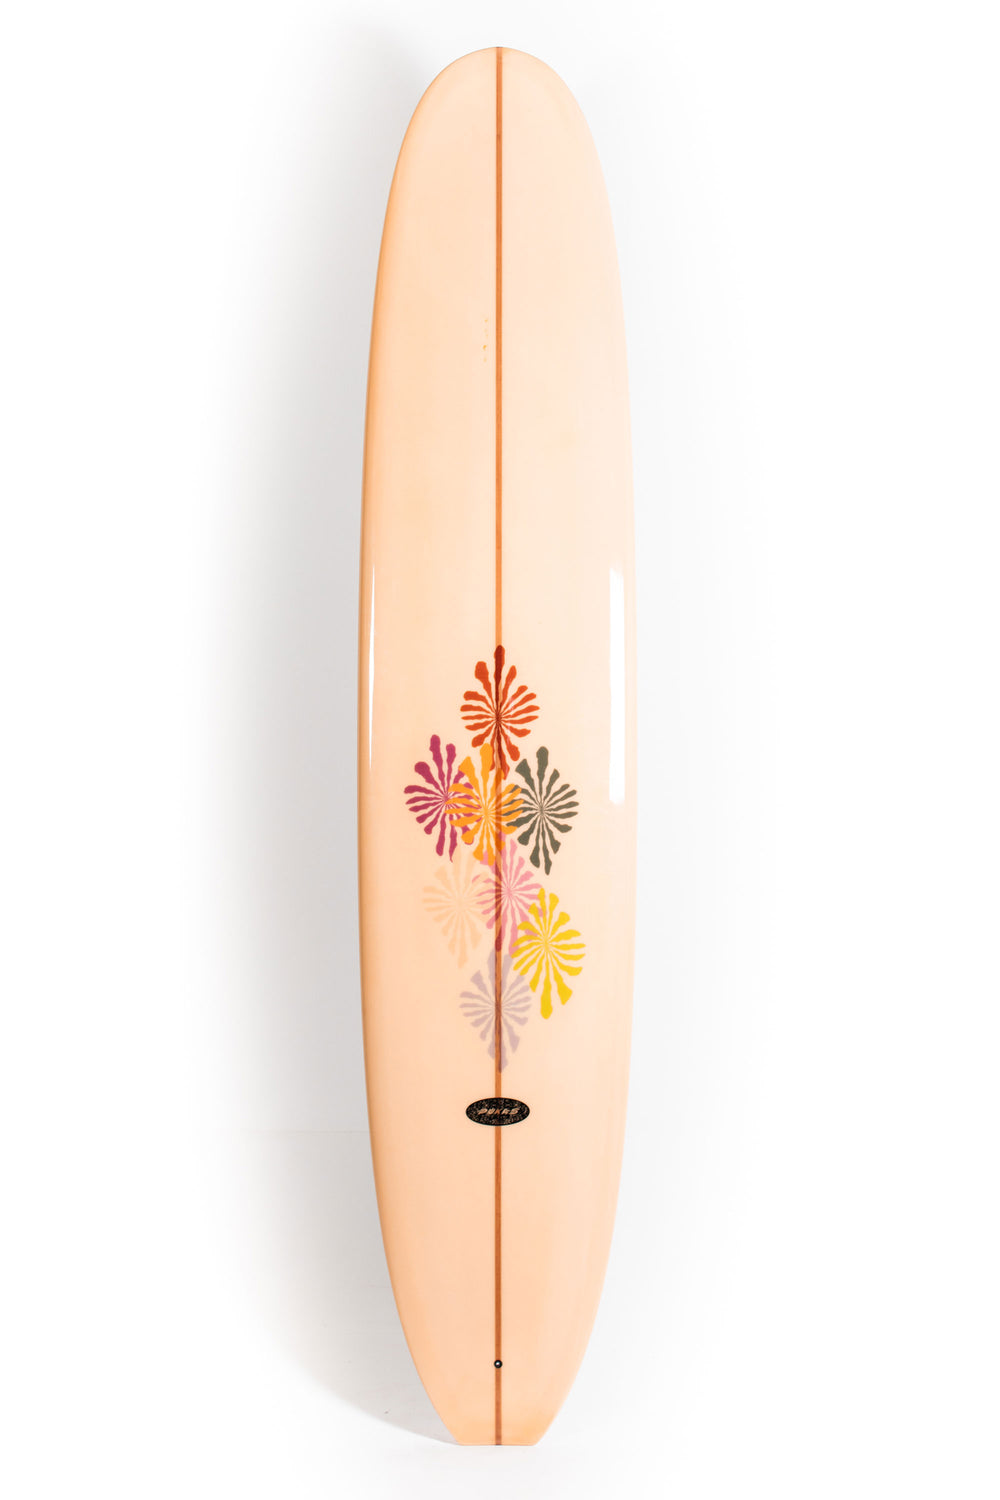 Pukas Surf Shop - Pukas Surfboards - MAYFLOWER by Axel Lorentz -  9'6